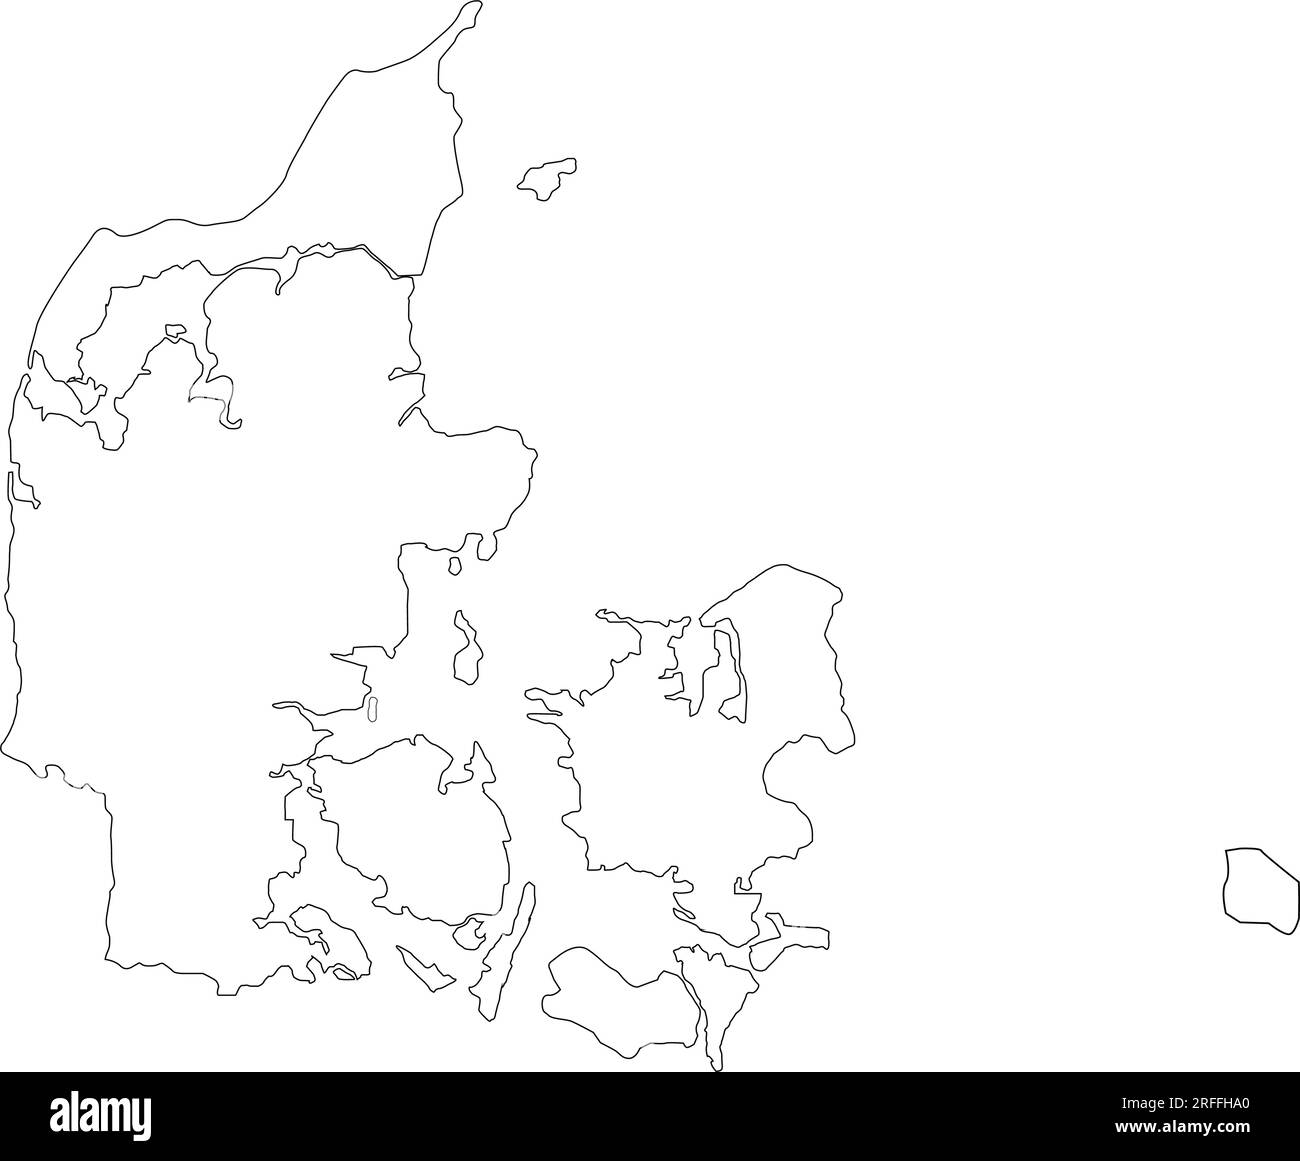 Viking map Black and White Stock Photos & Images - Alamy